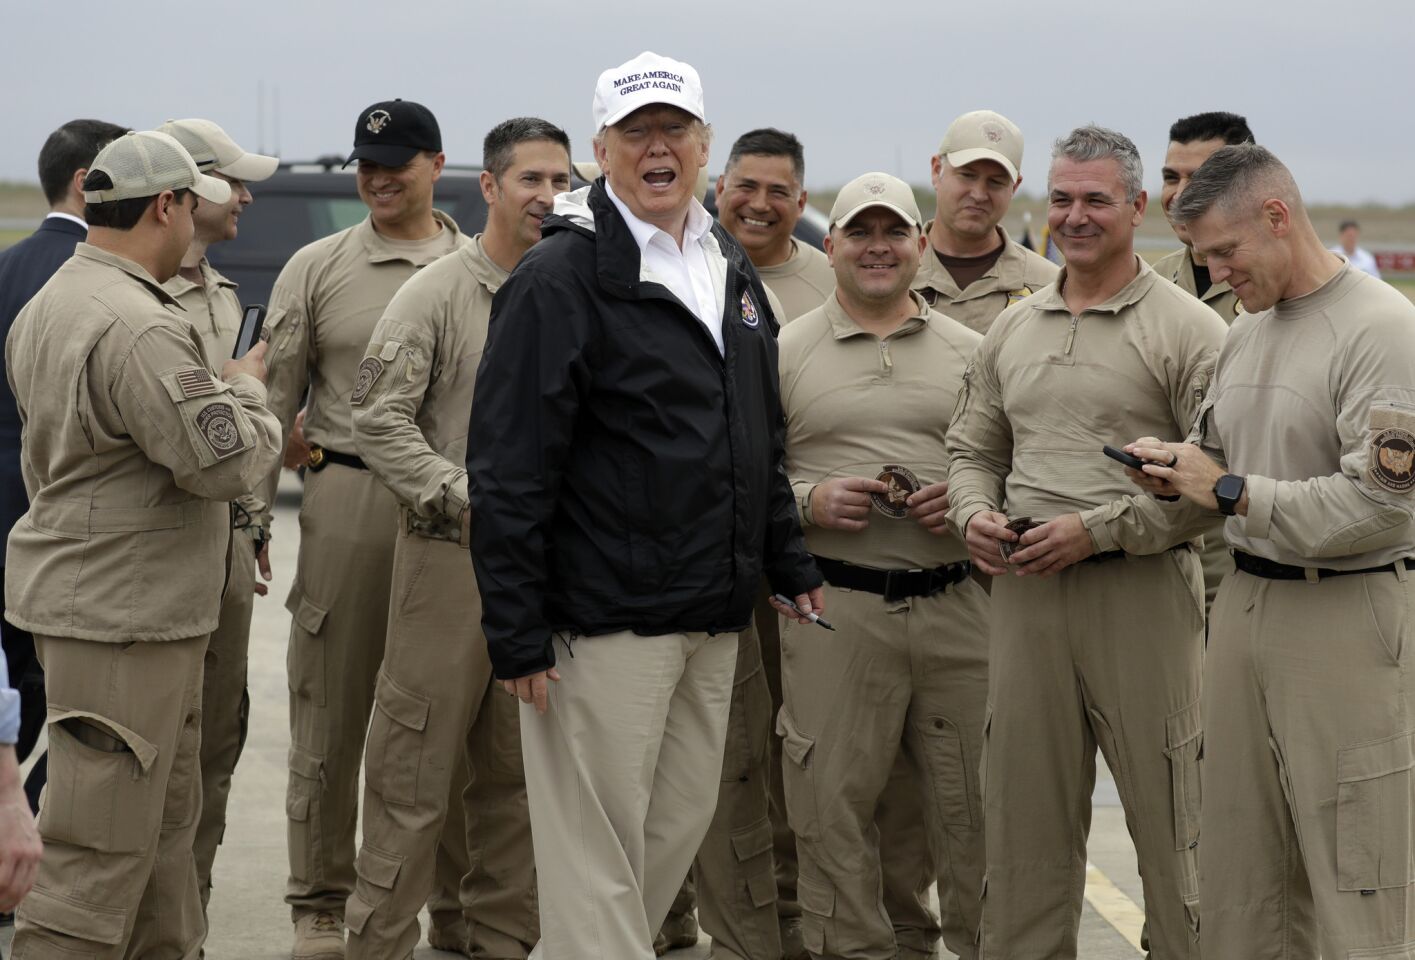 President Trump's border visit